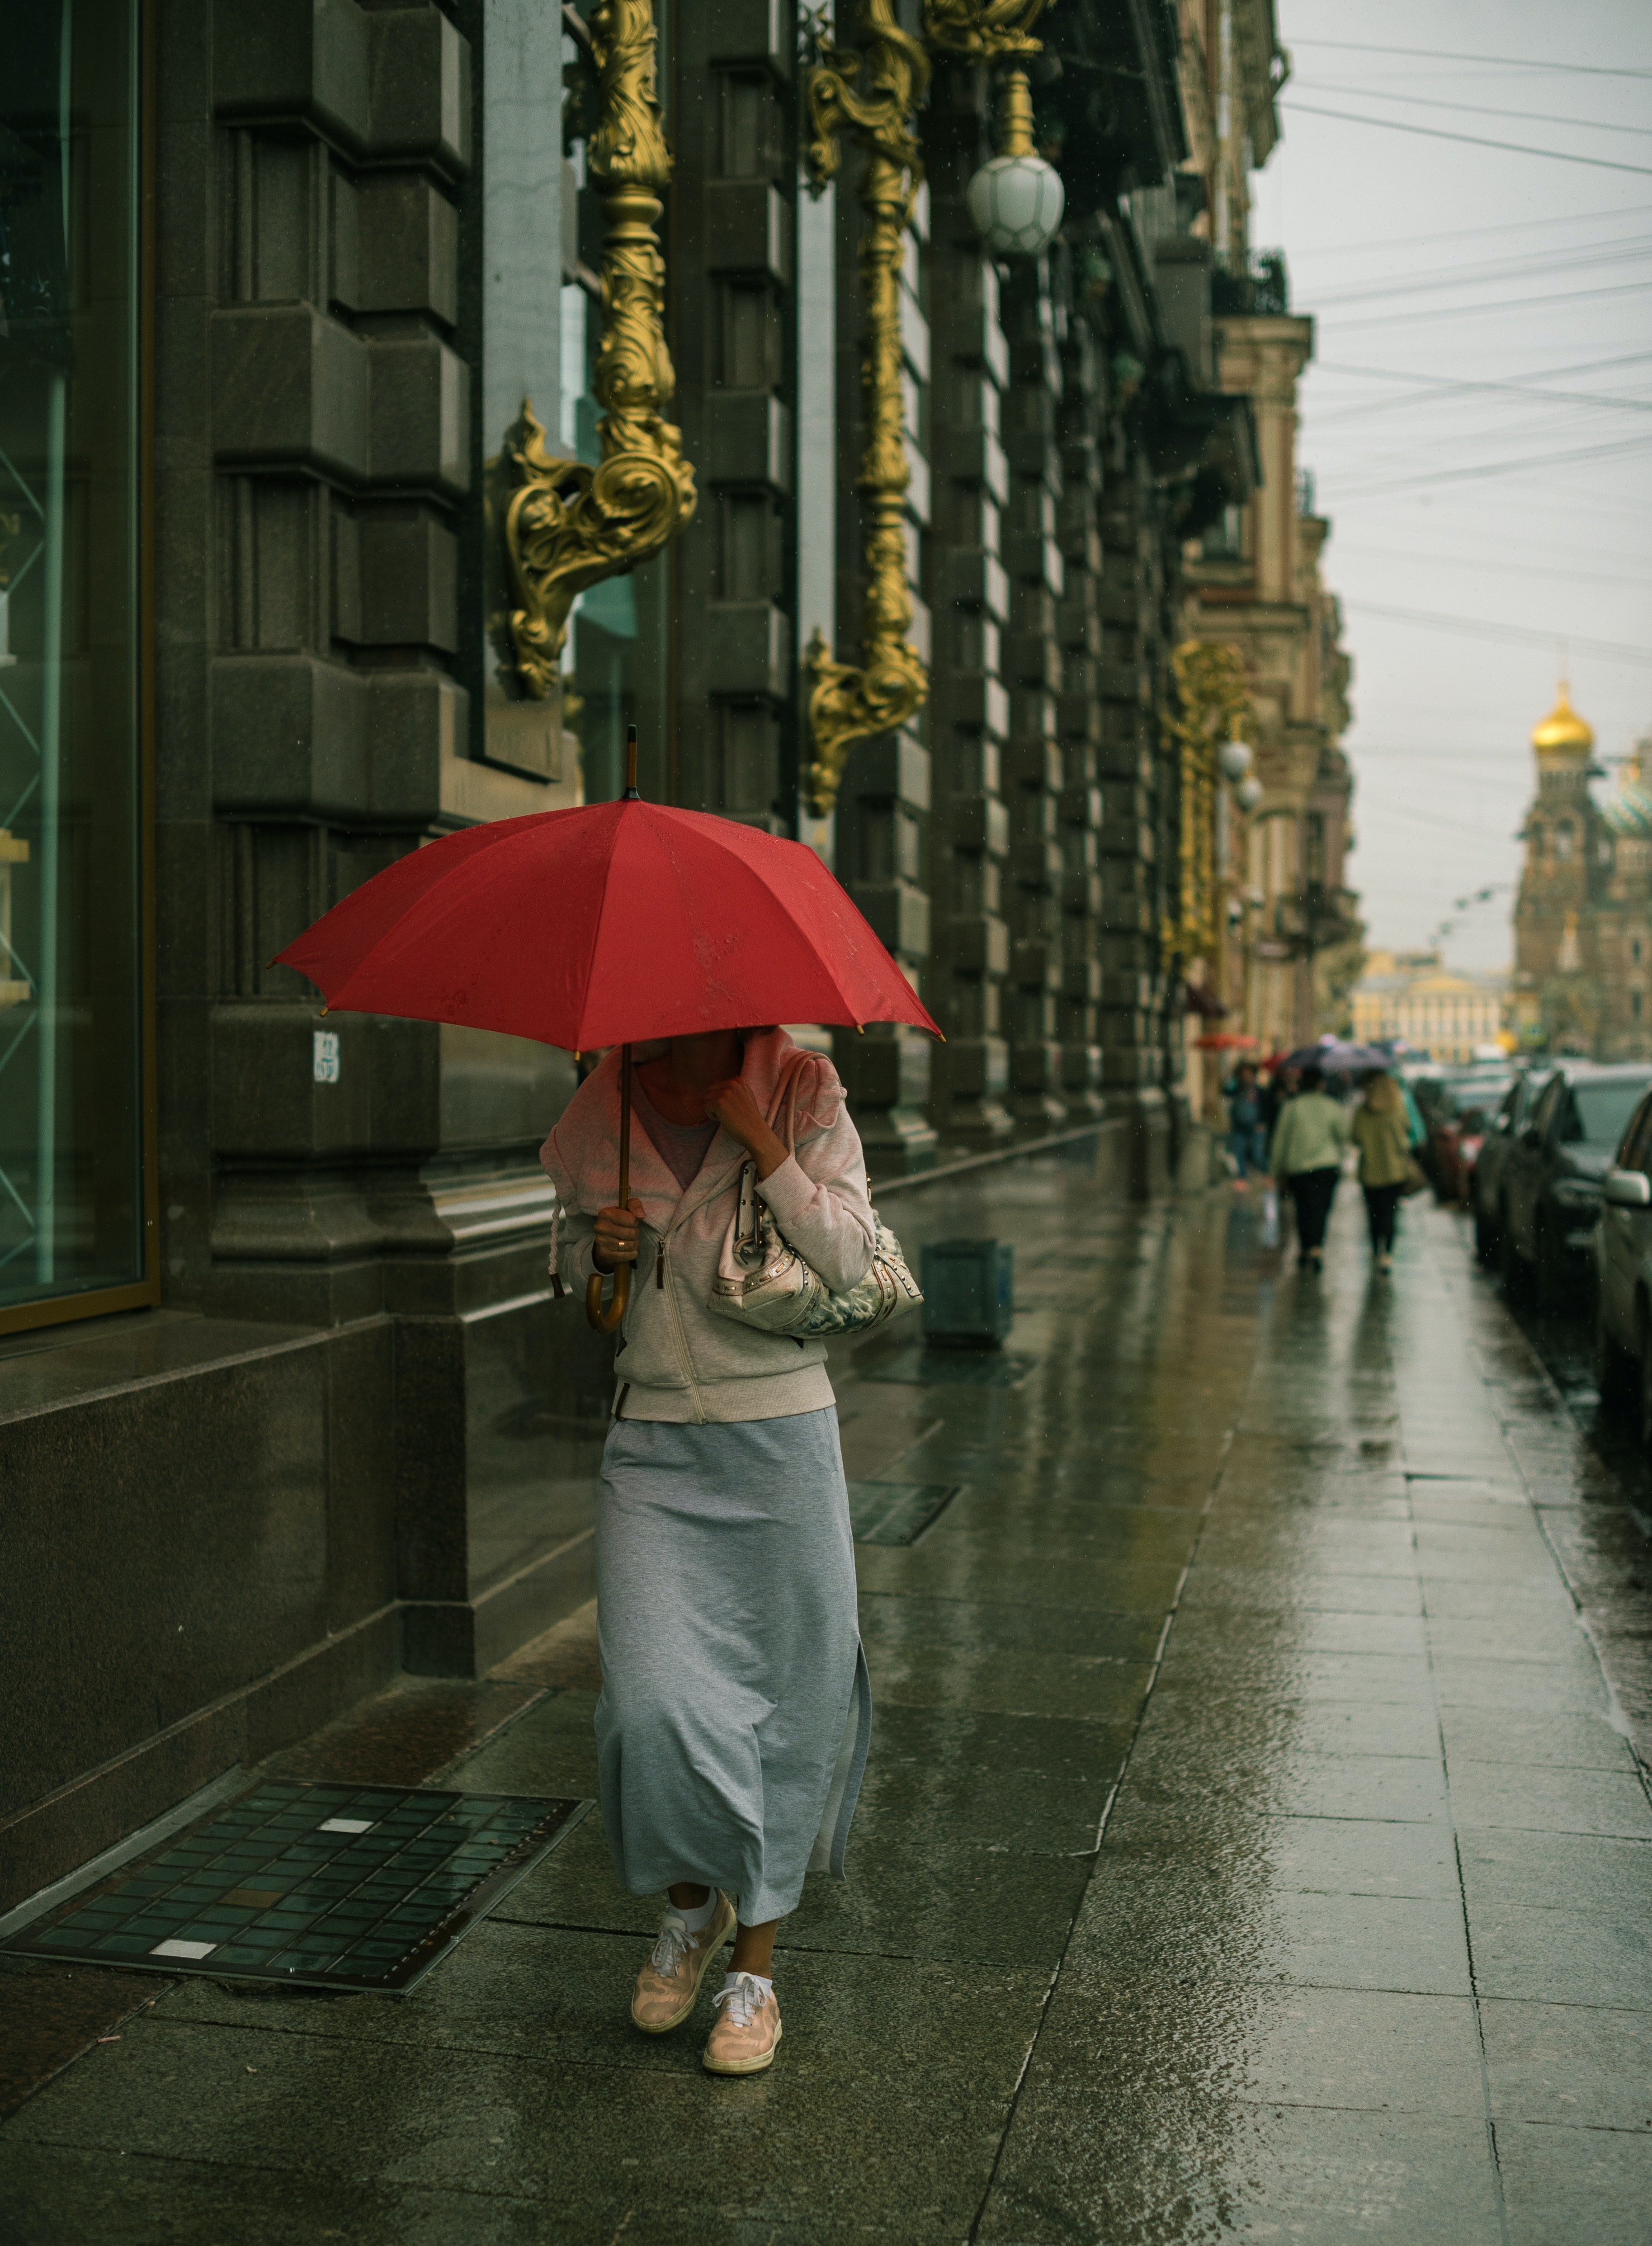 Walking Alone In The Rain Wallpapers